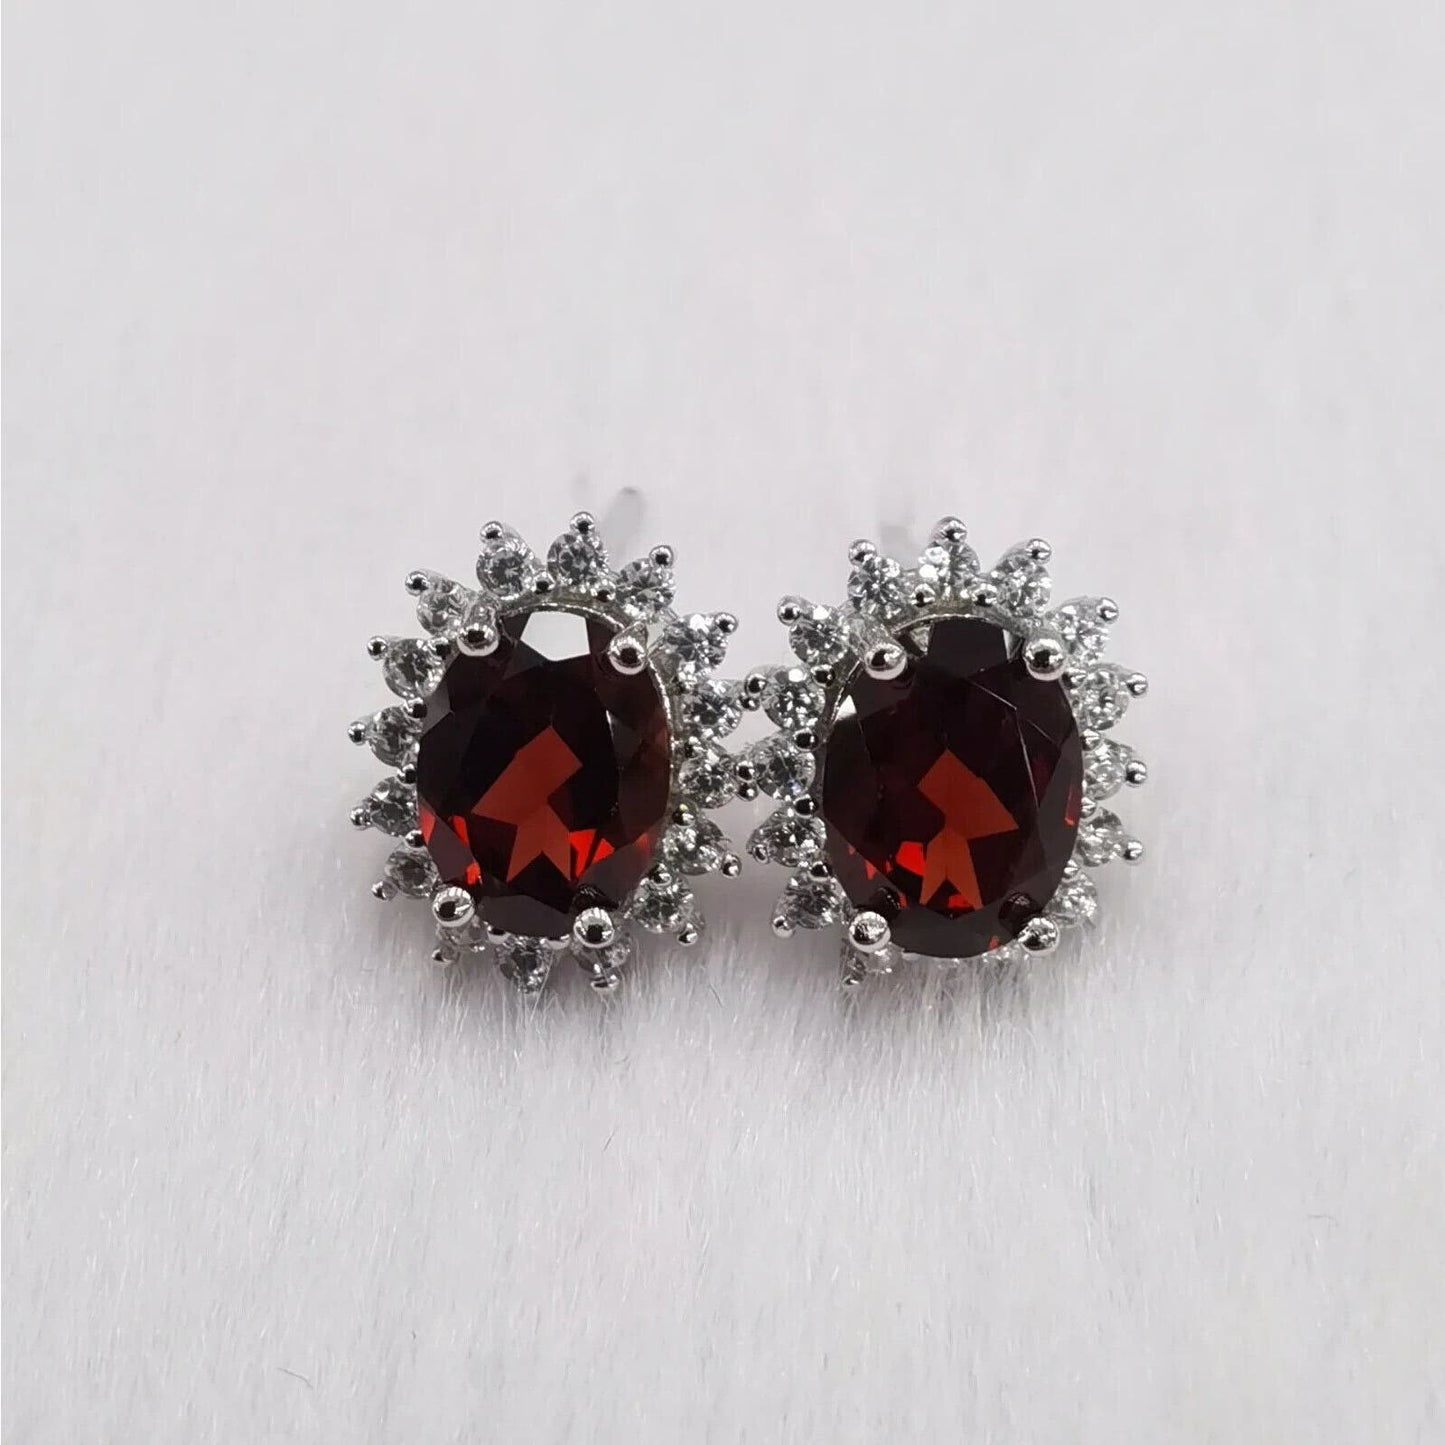 Dark Red Garnet Stud Earrings Oval Cut 6x8mm Platinum Plated